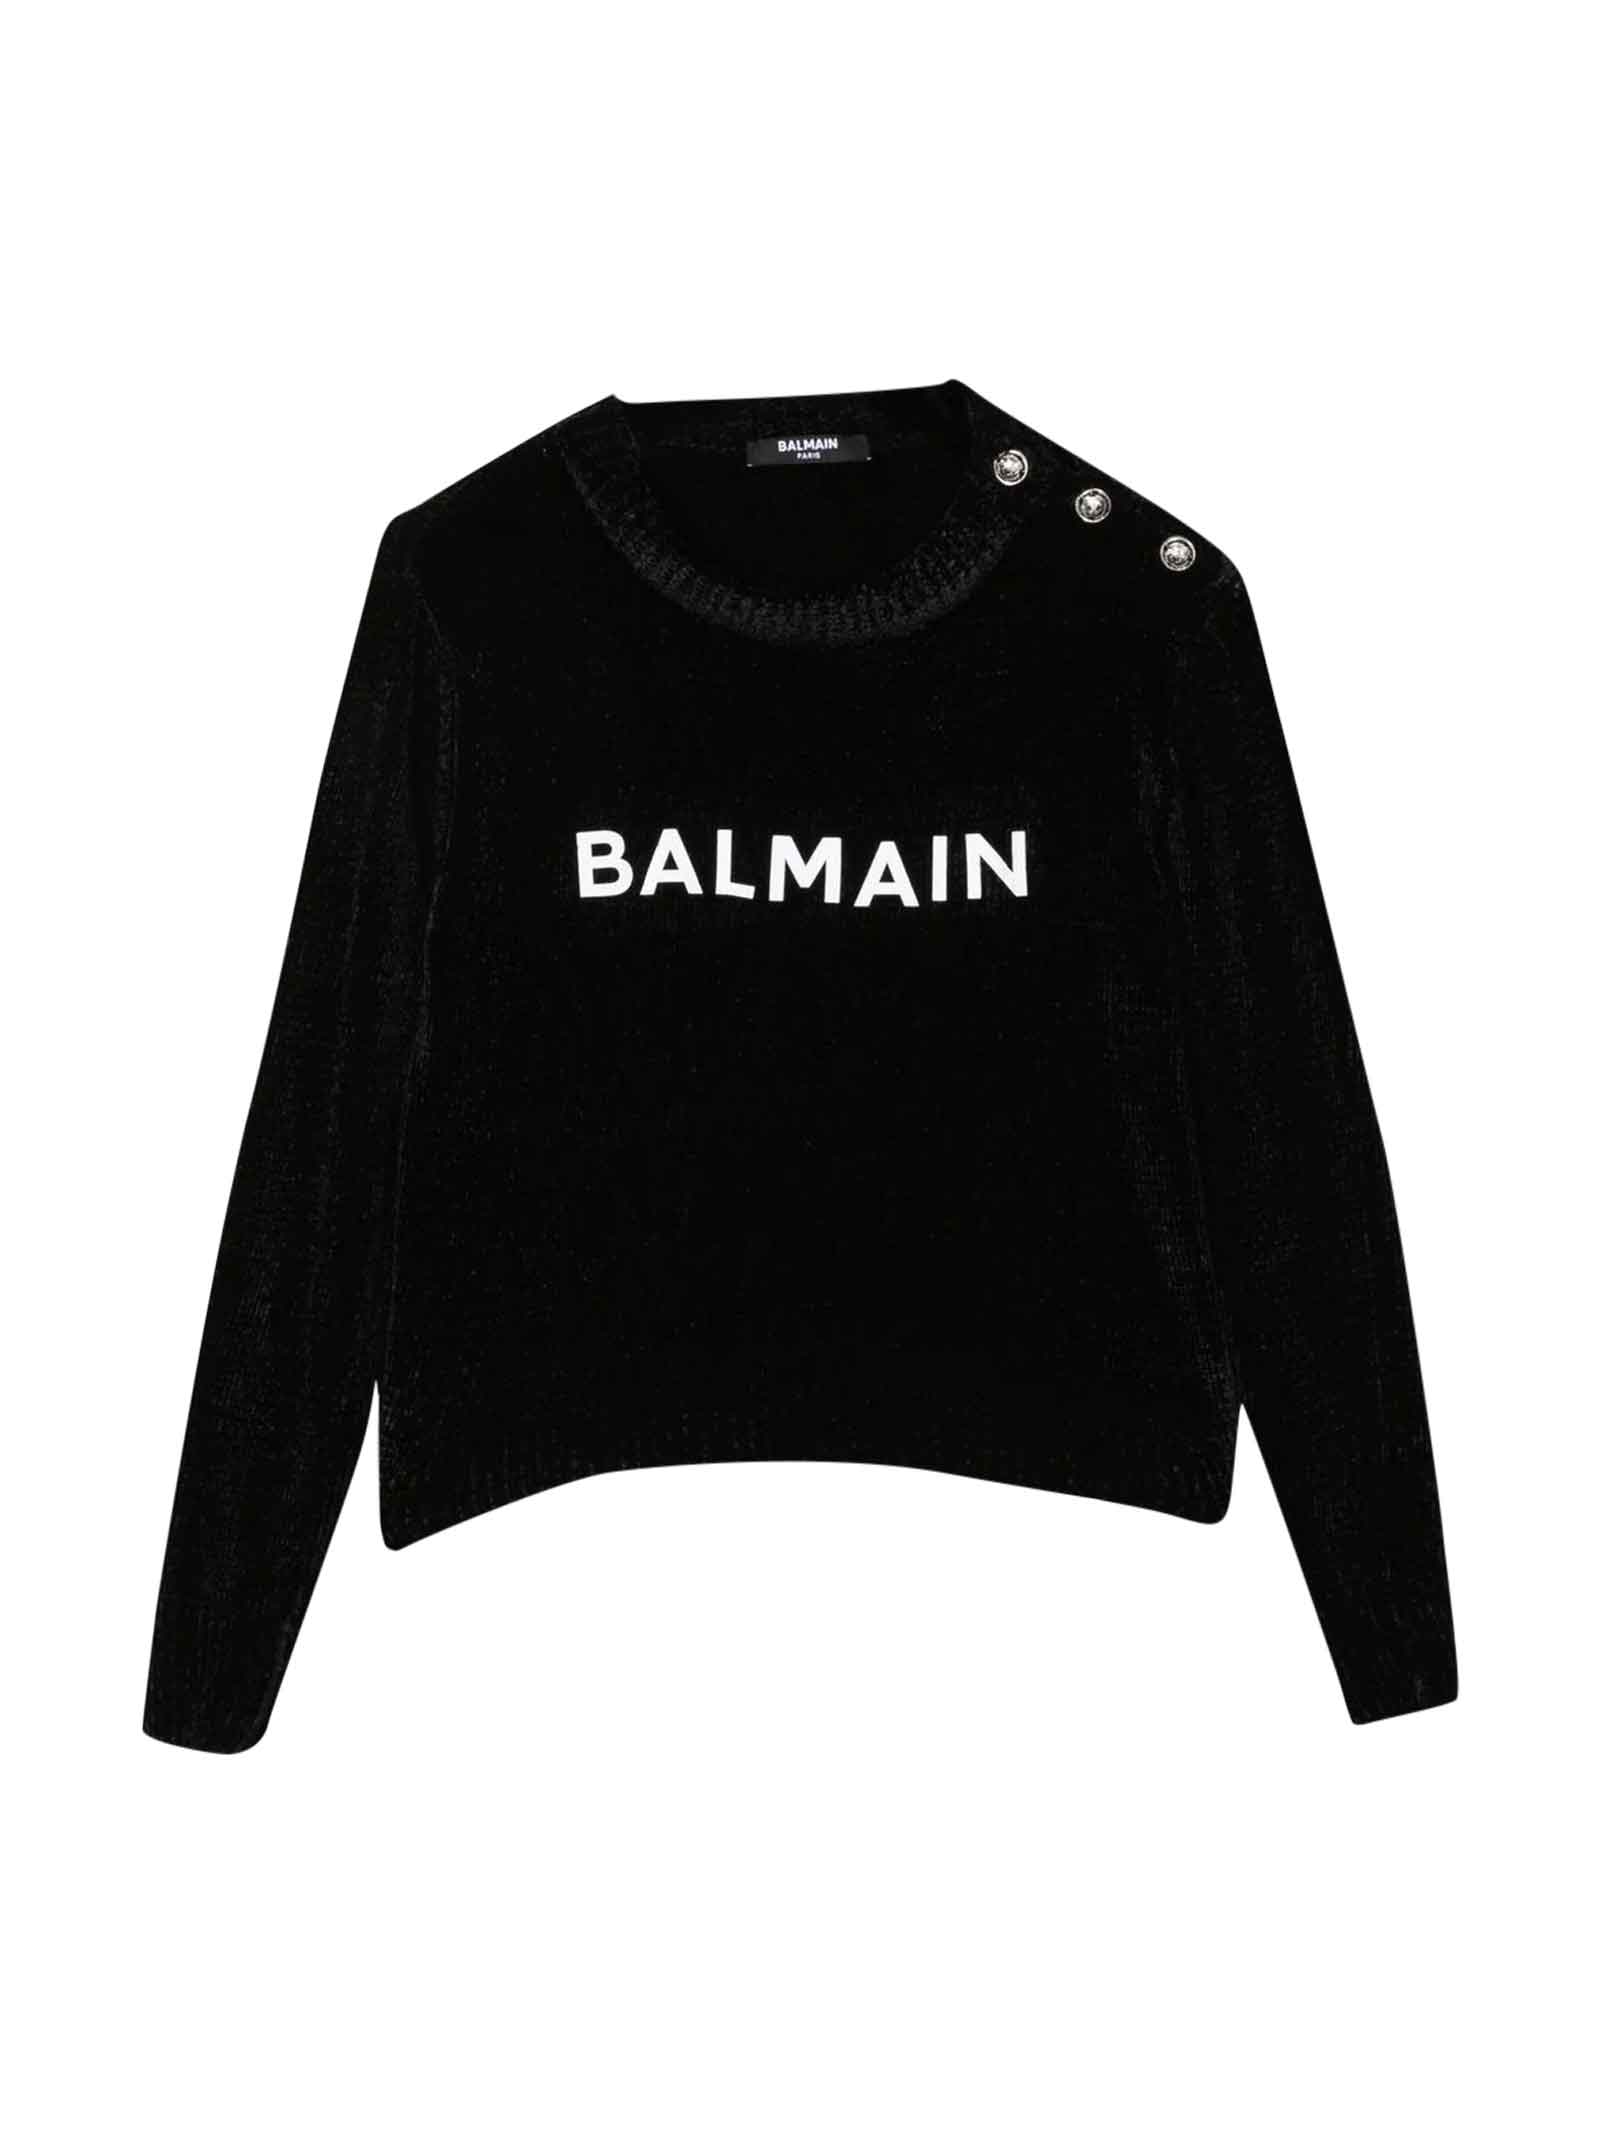 Balmain Unisex Black Sweater